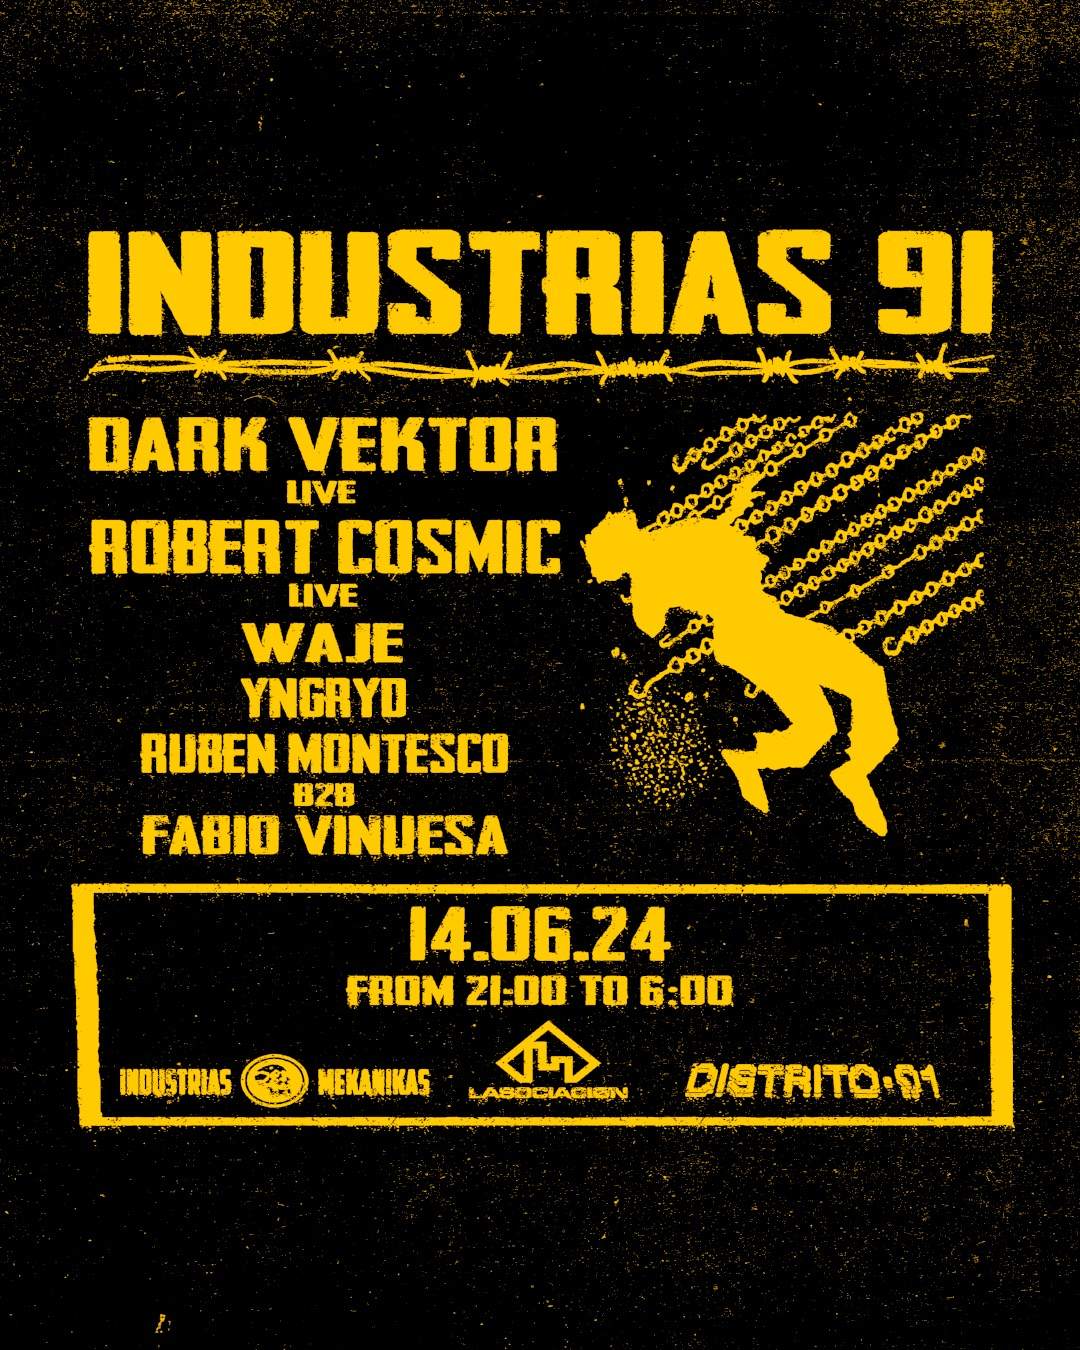 INDUSTRIAS 91 presenta Dark Vektor (live), Robert Cosmic (live), Waje, Yngryd - フライヤー表